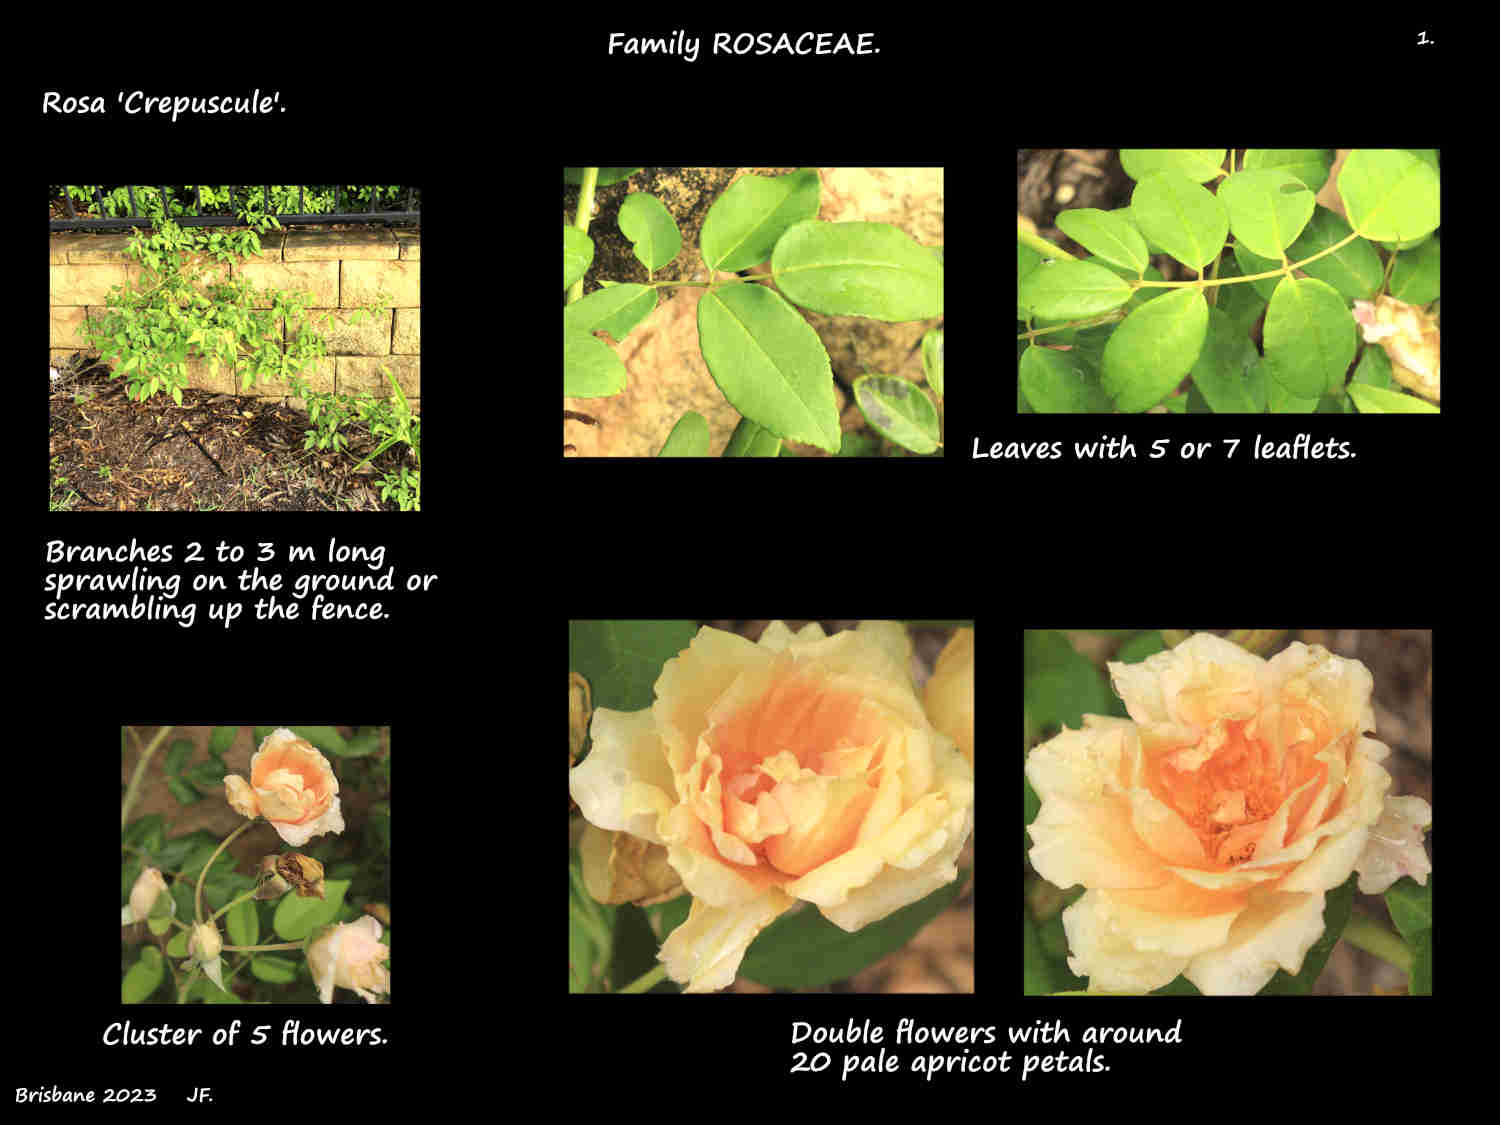 1 Rosa 'Crepuscule' young plant & flowers